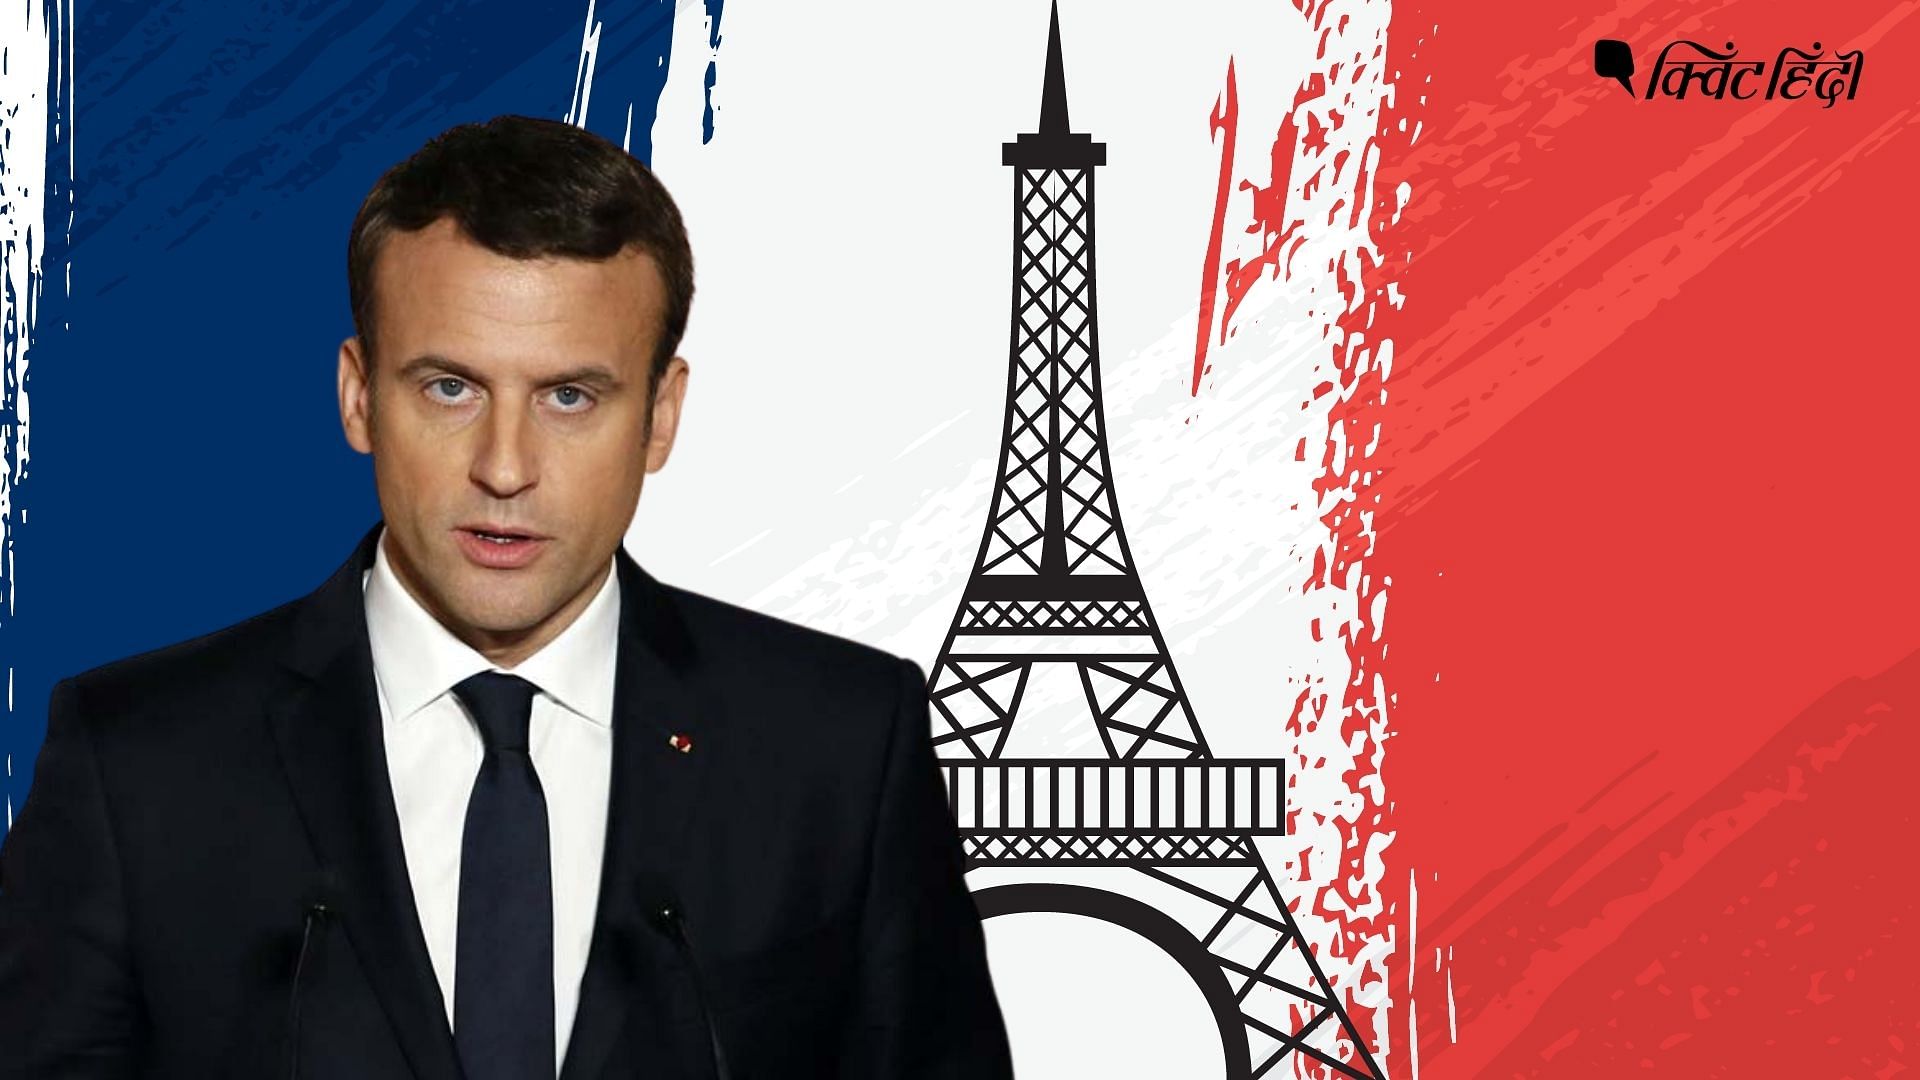 <div class="paragraphs"><p>Emmanuel Macron ने लगातार दूसरी बार जीता राष्ट्रपति चुनाव</p></div>